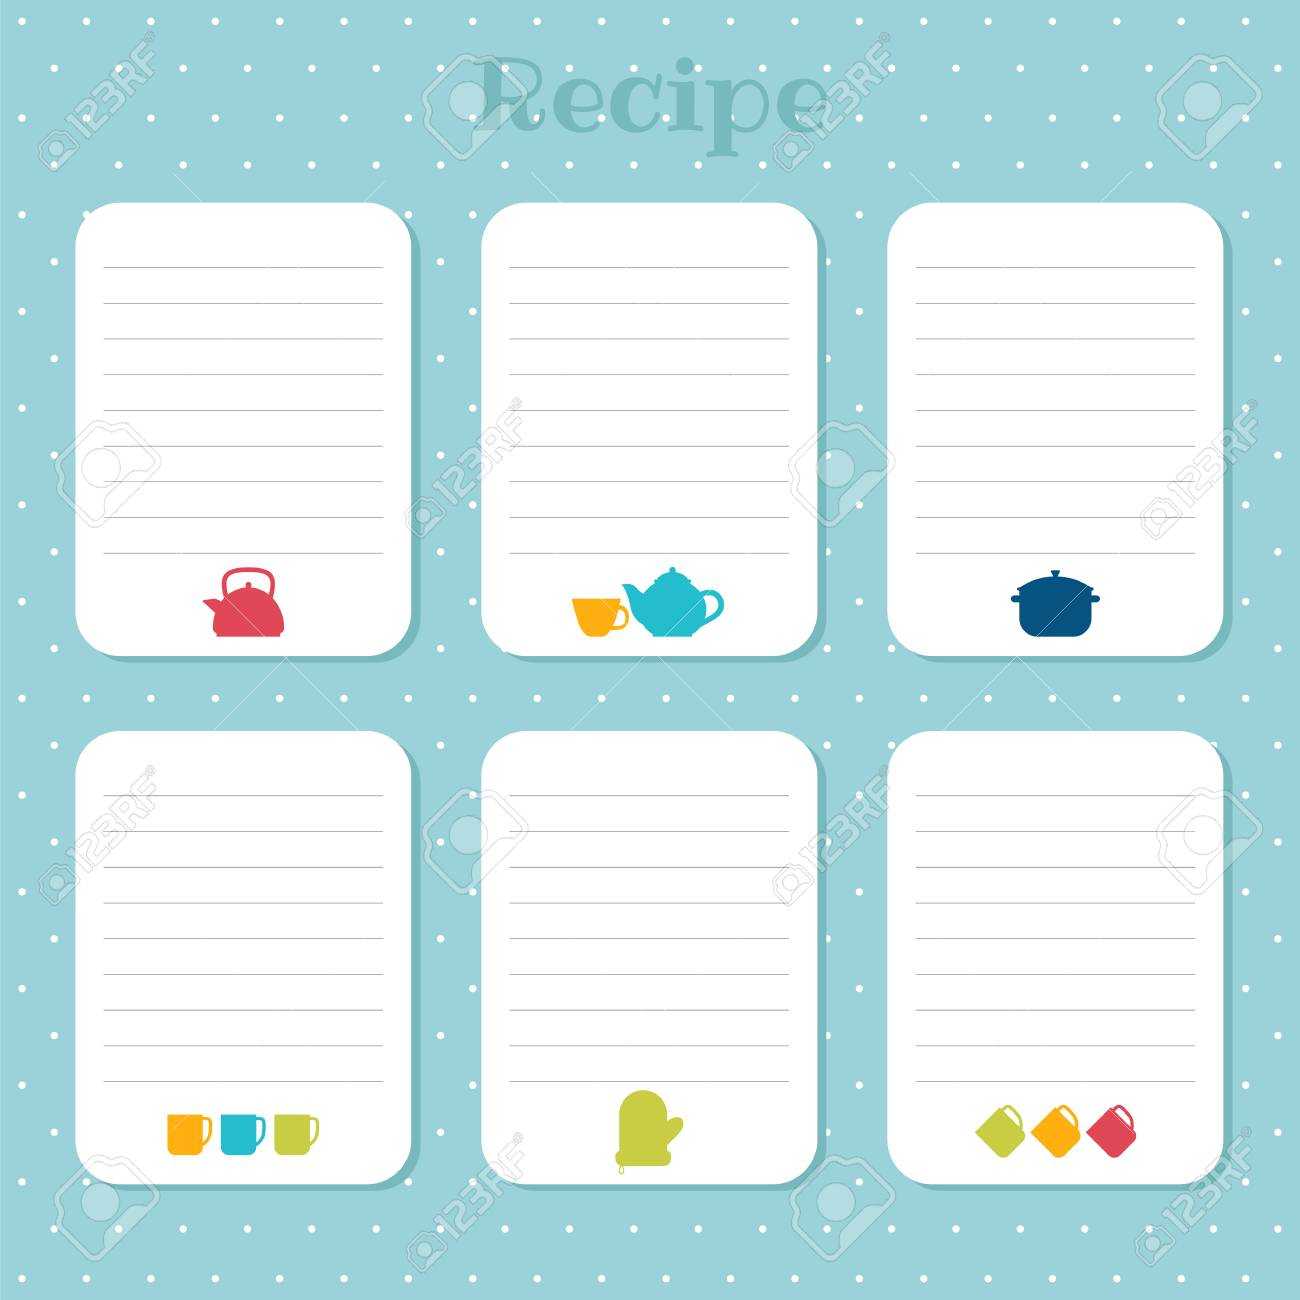 Restaurant Recipe Card Template – Karati.ald2014 For Restaurant Recipe Card Template